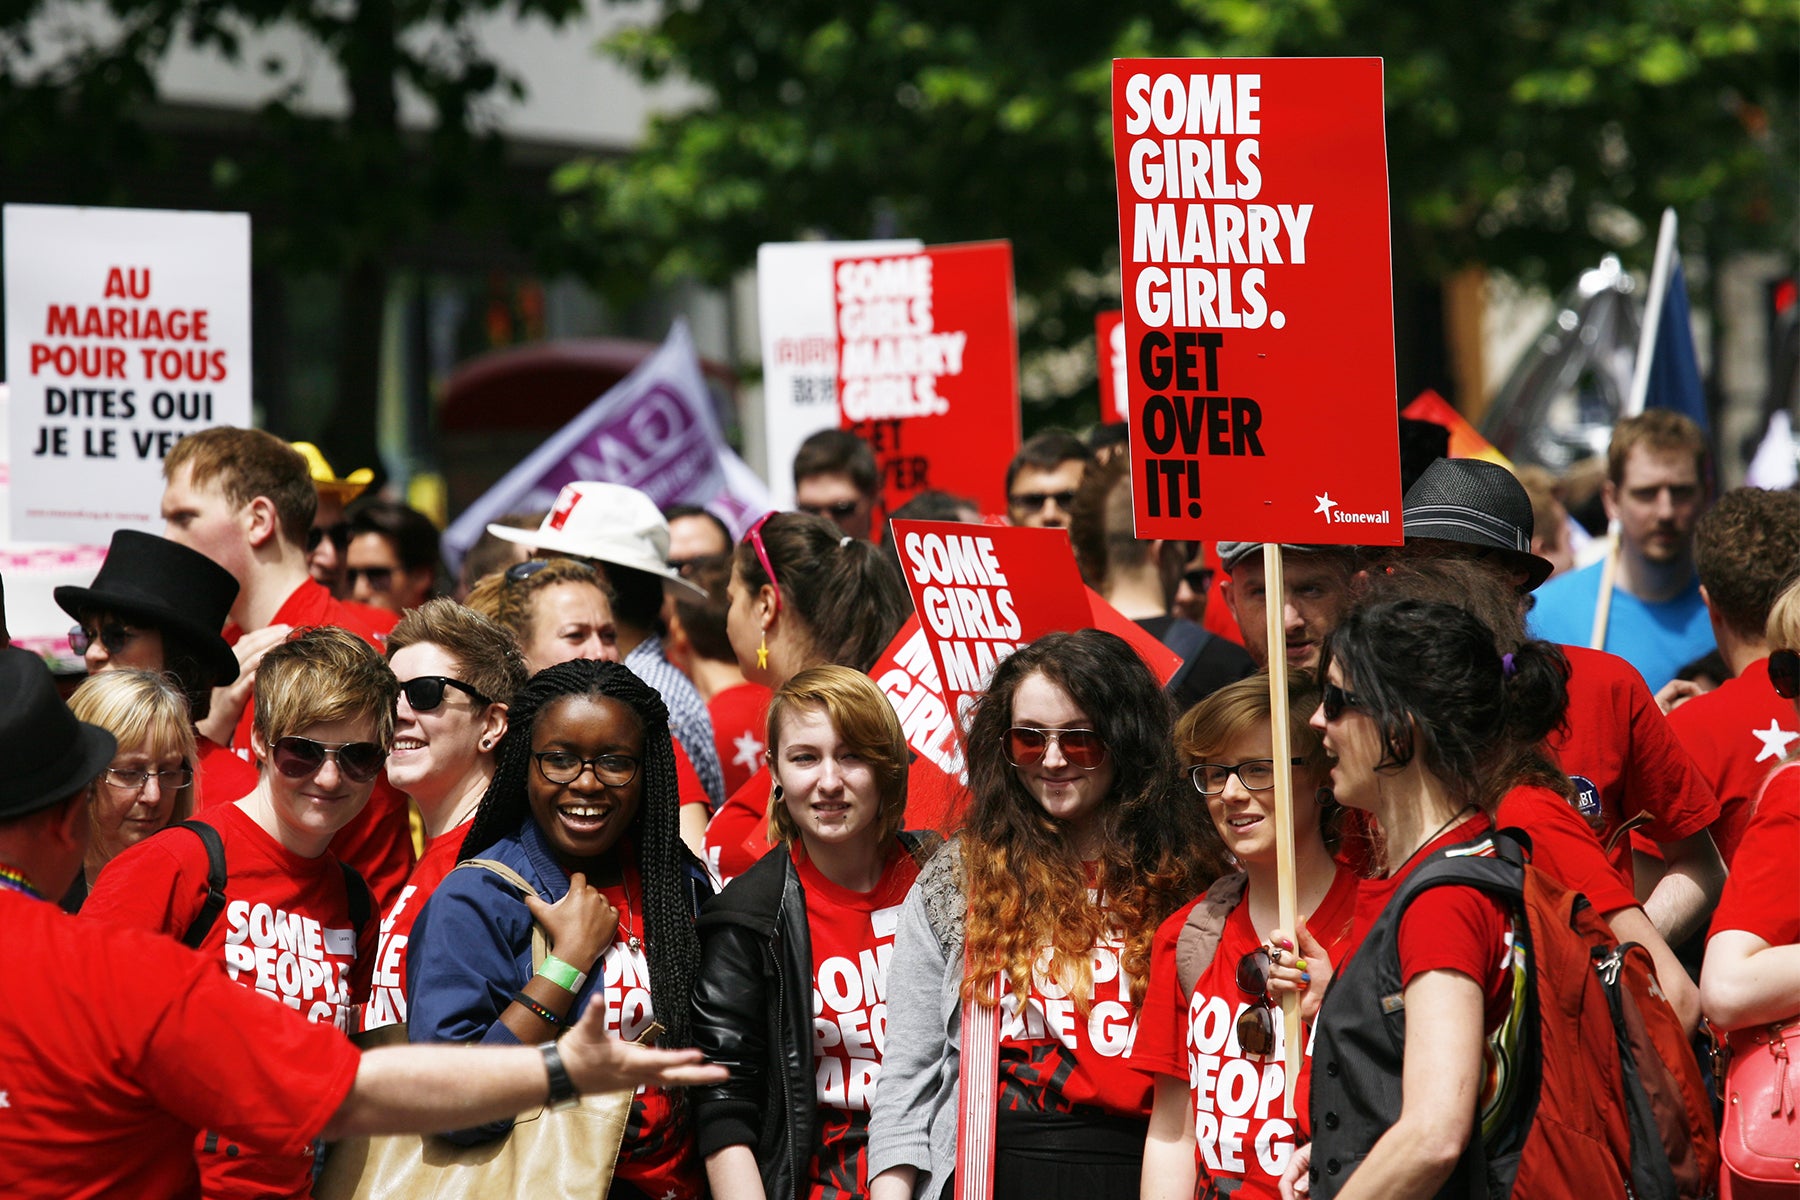 Group of Women at London Pride | Editorial credit: Bikeworldtravel / Shutterstock.com